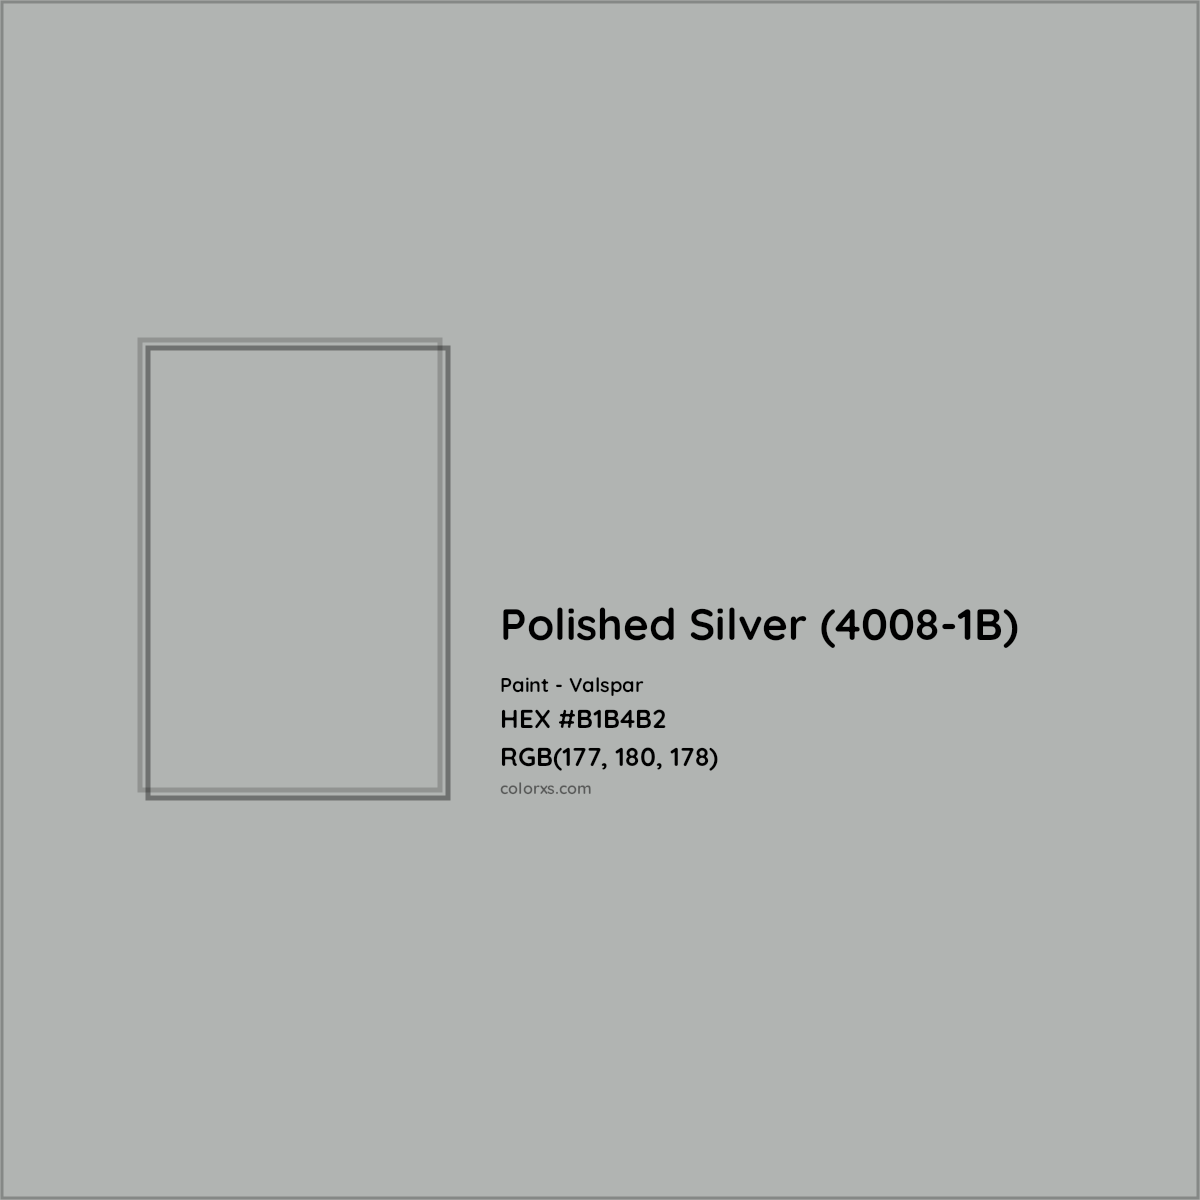 HEX #B1B4B2 Polished Silver (4008-1B) Paint Valspar - Color Code